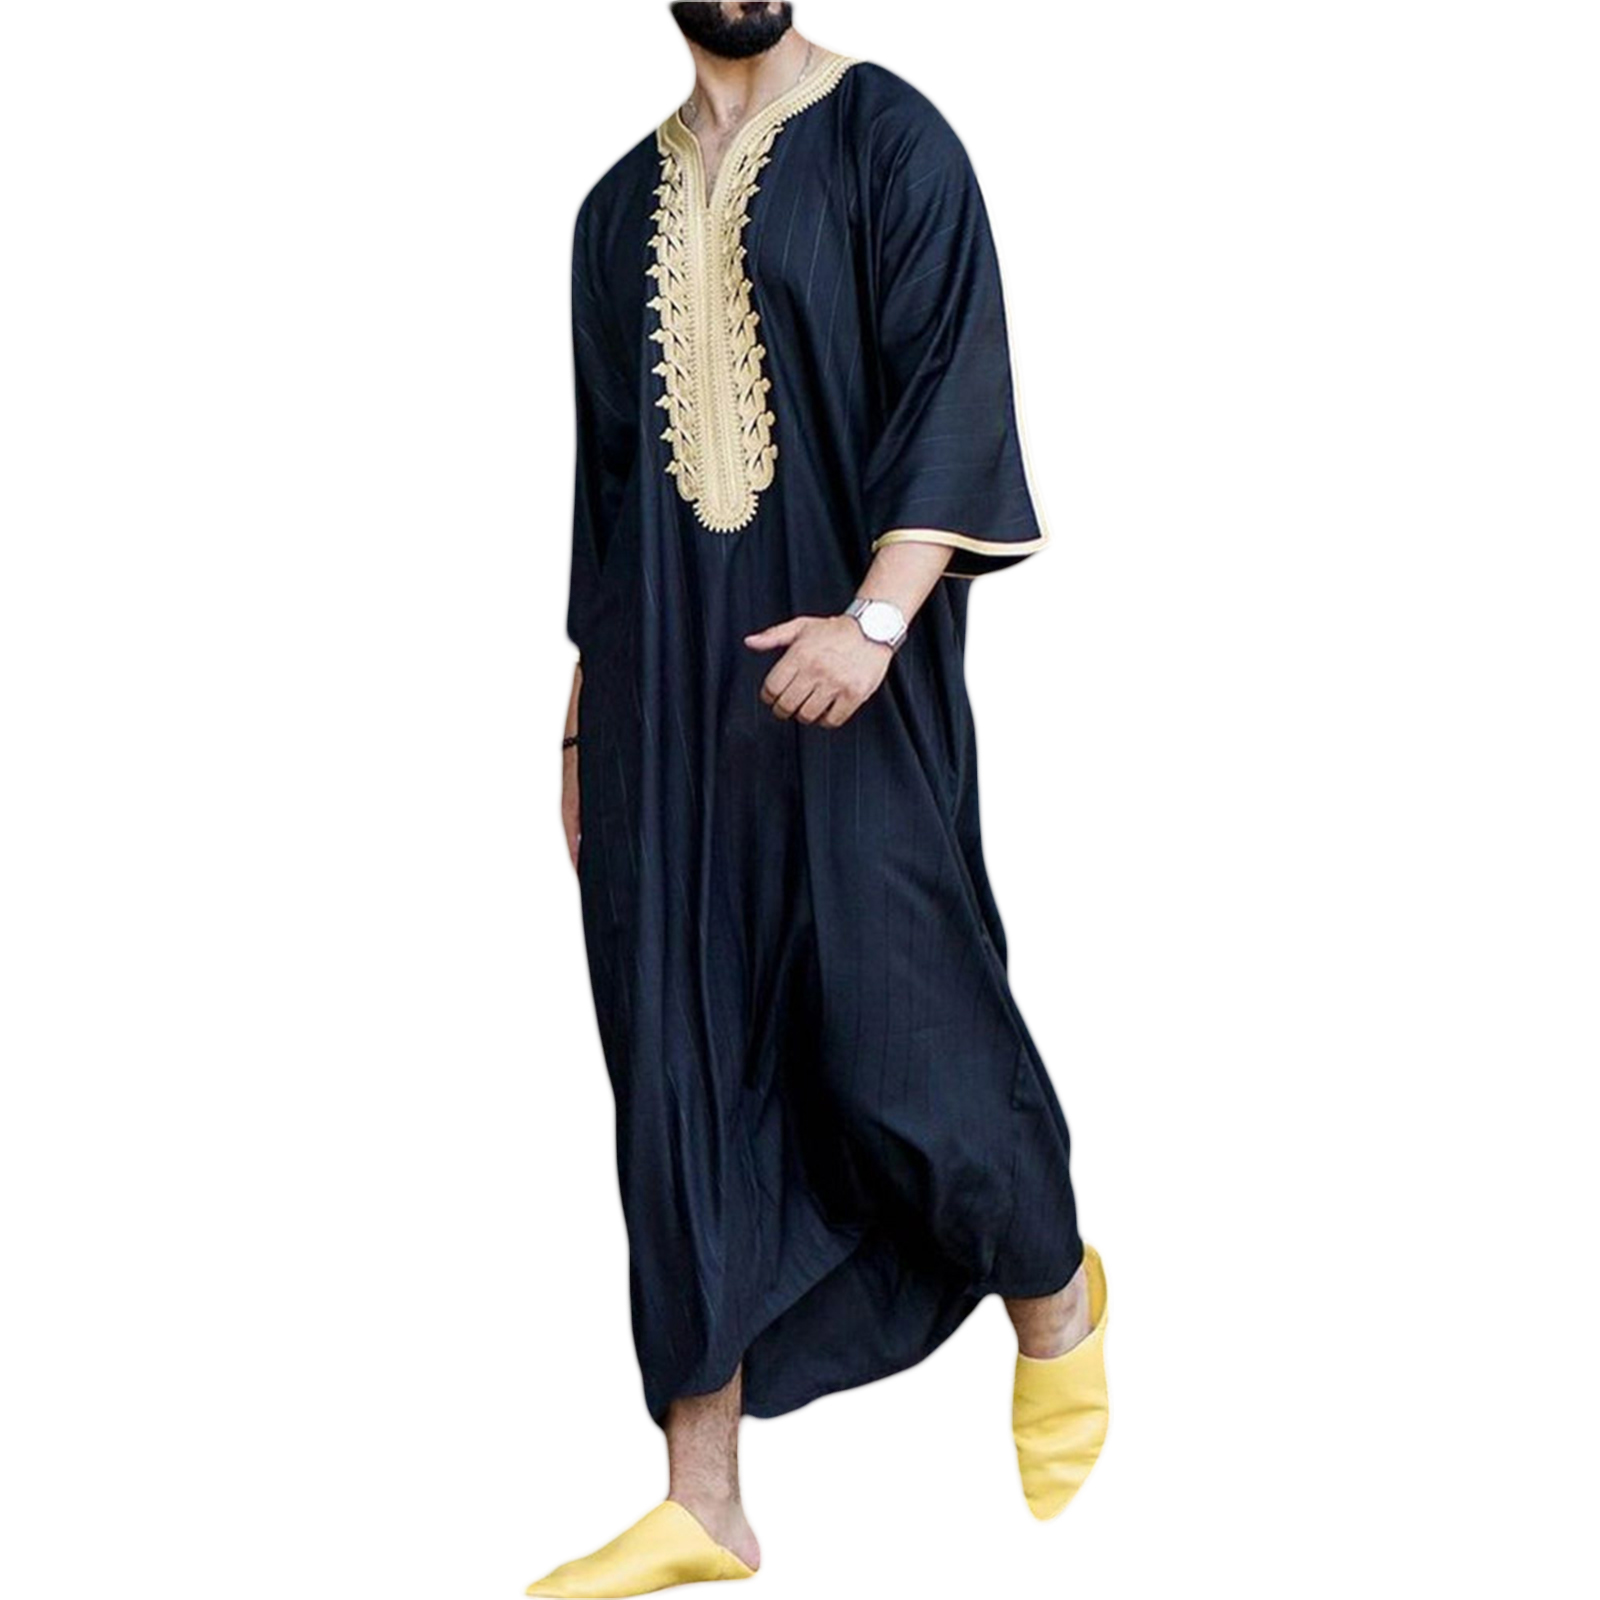 Men's Islamic Muslim Jubba Kaftan Thobe Abaya Arab Robe Maxi Dress Middle East Robe Shirt - image 2 of 5